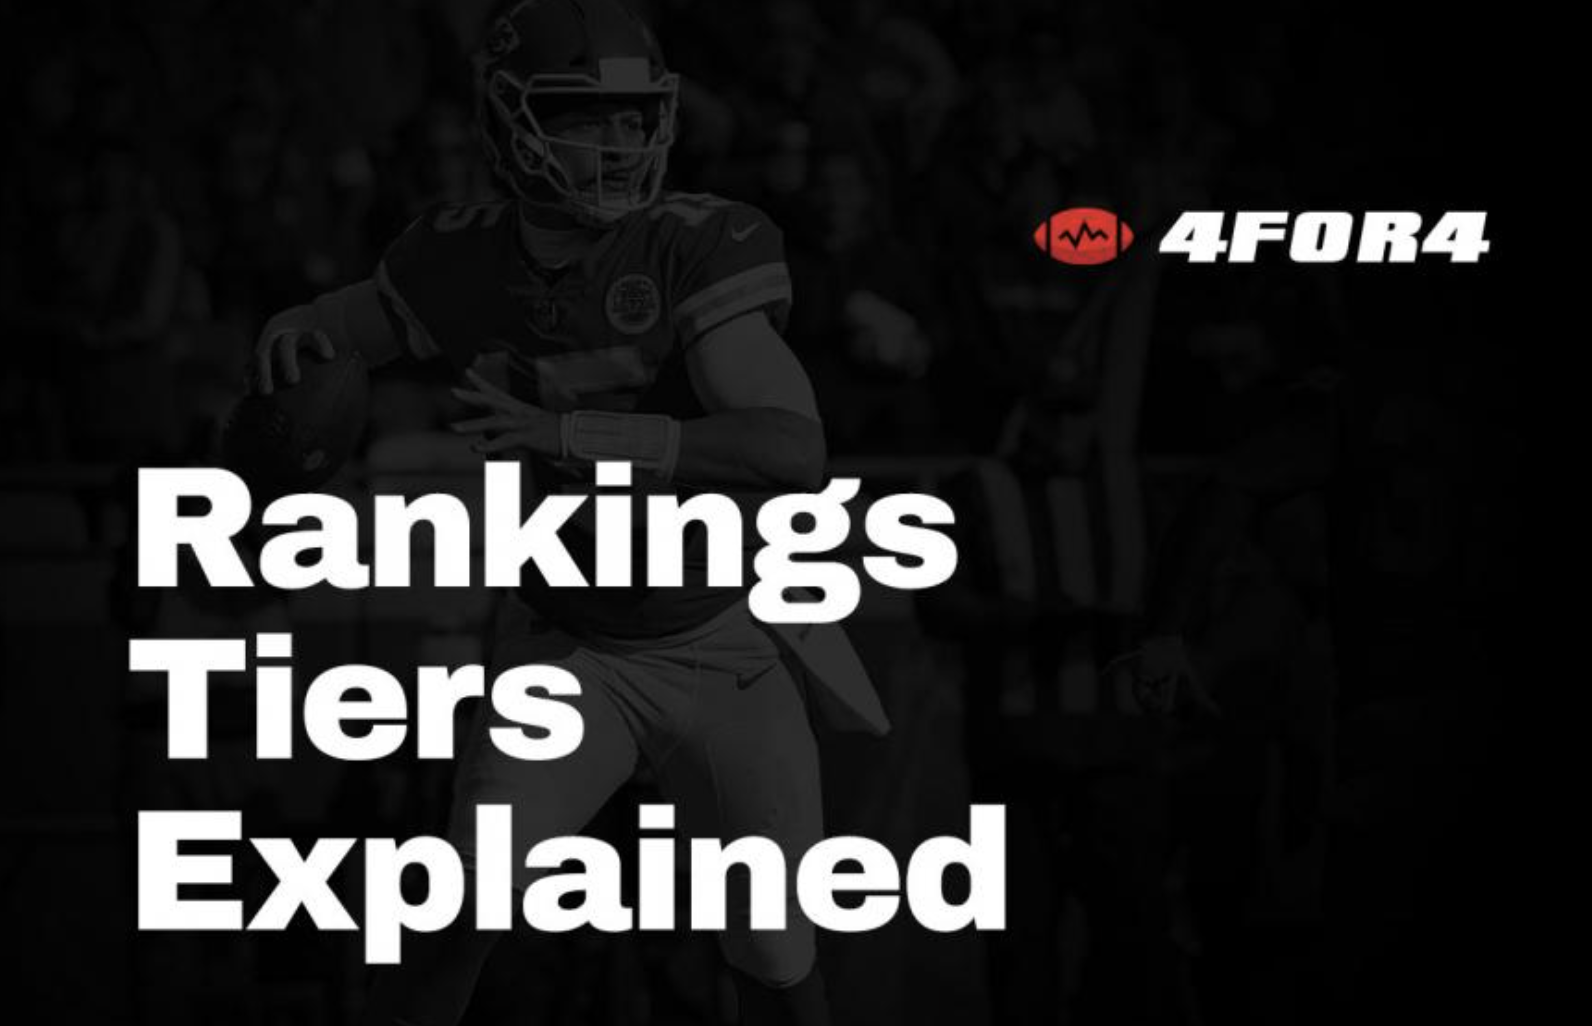 fantasy football draft rankings custom scoring